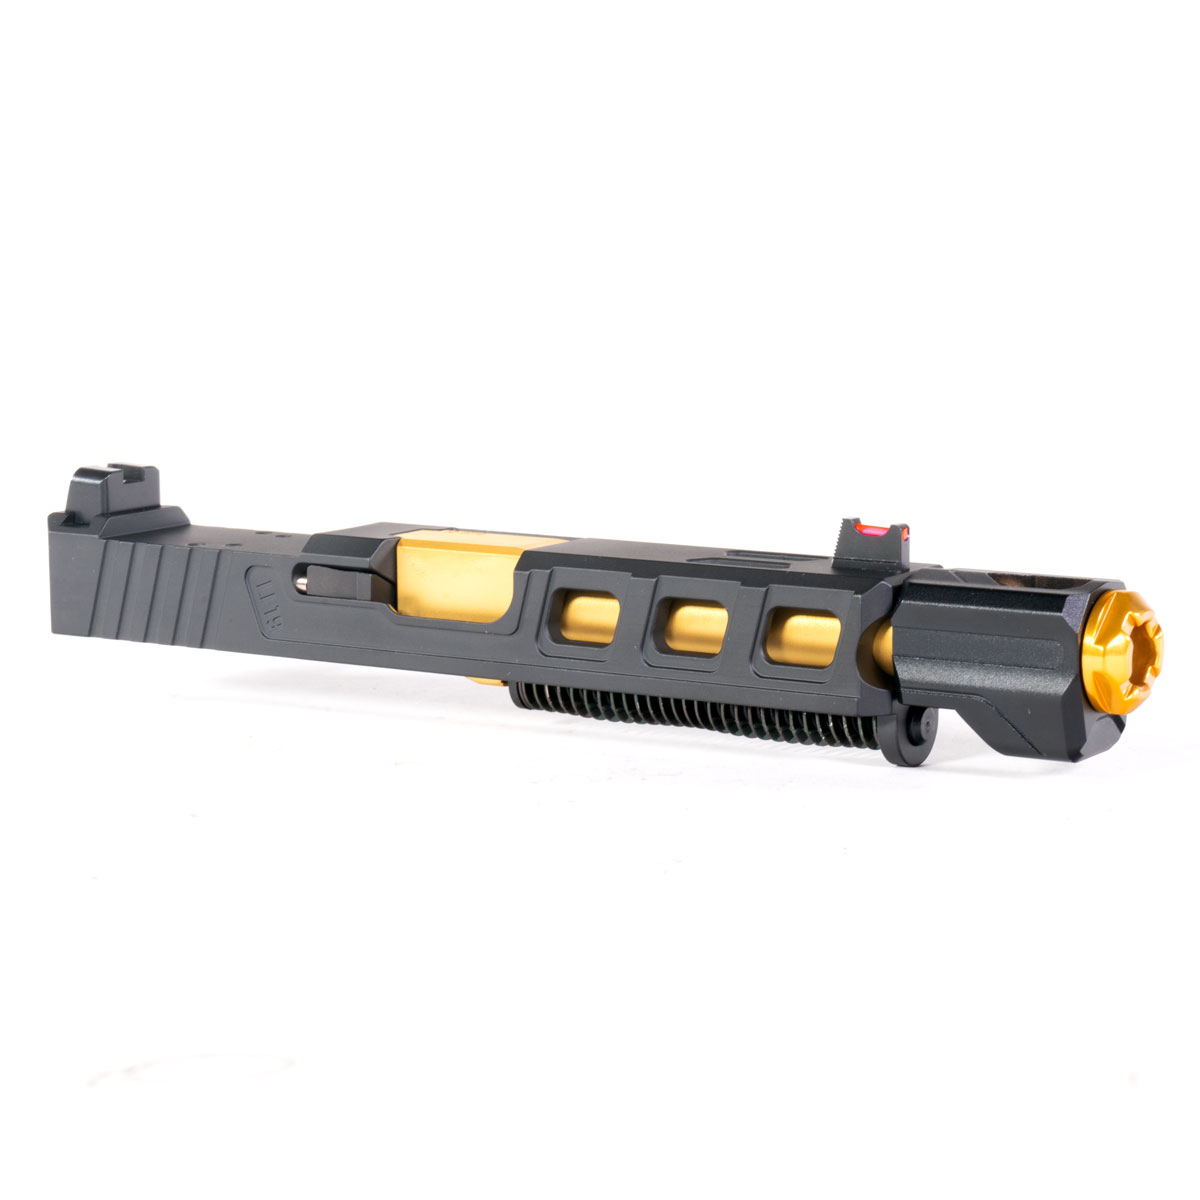 DD 'Peng w/ Tyrant Designs Compensator' 9mm Complete Slide Kit - Glock 19 Gen 1-3 Compatible